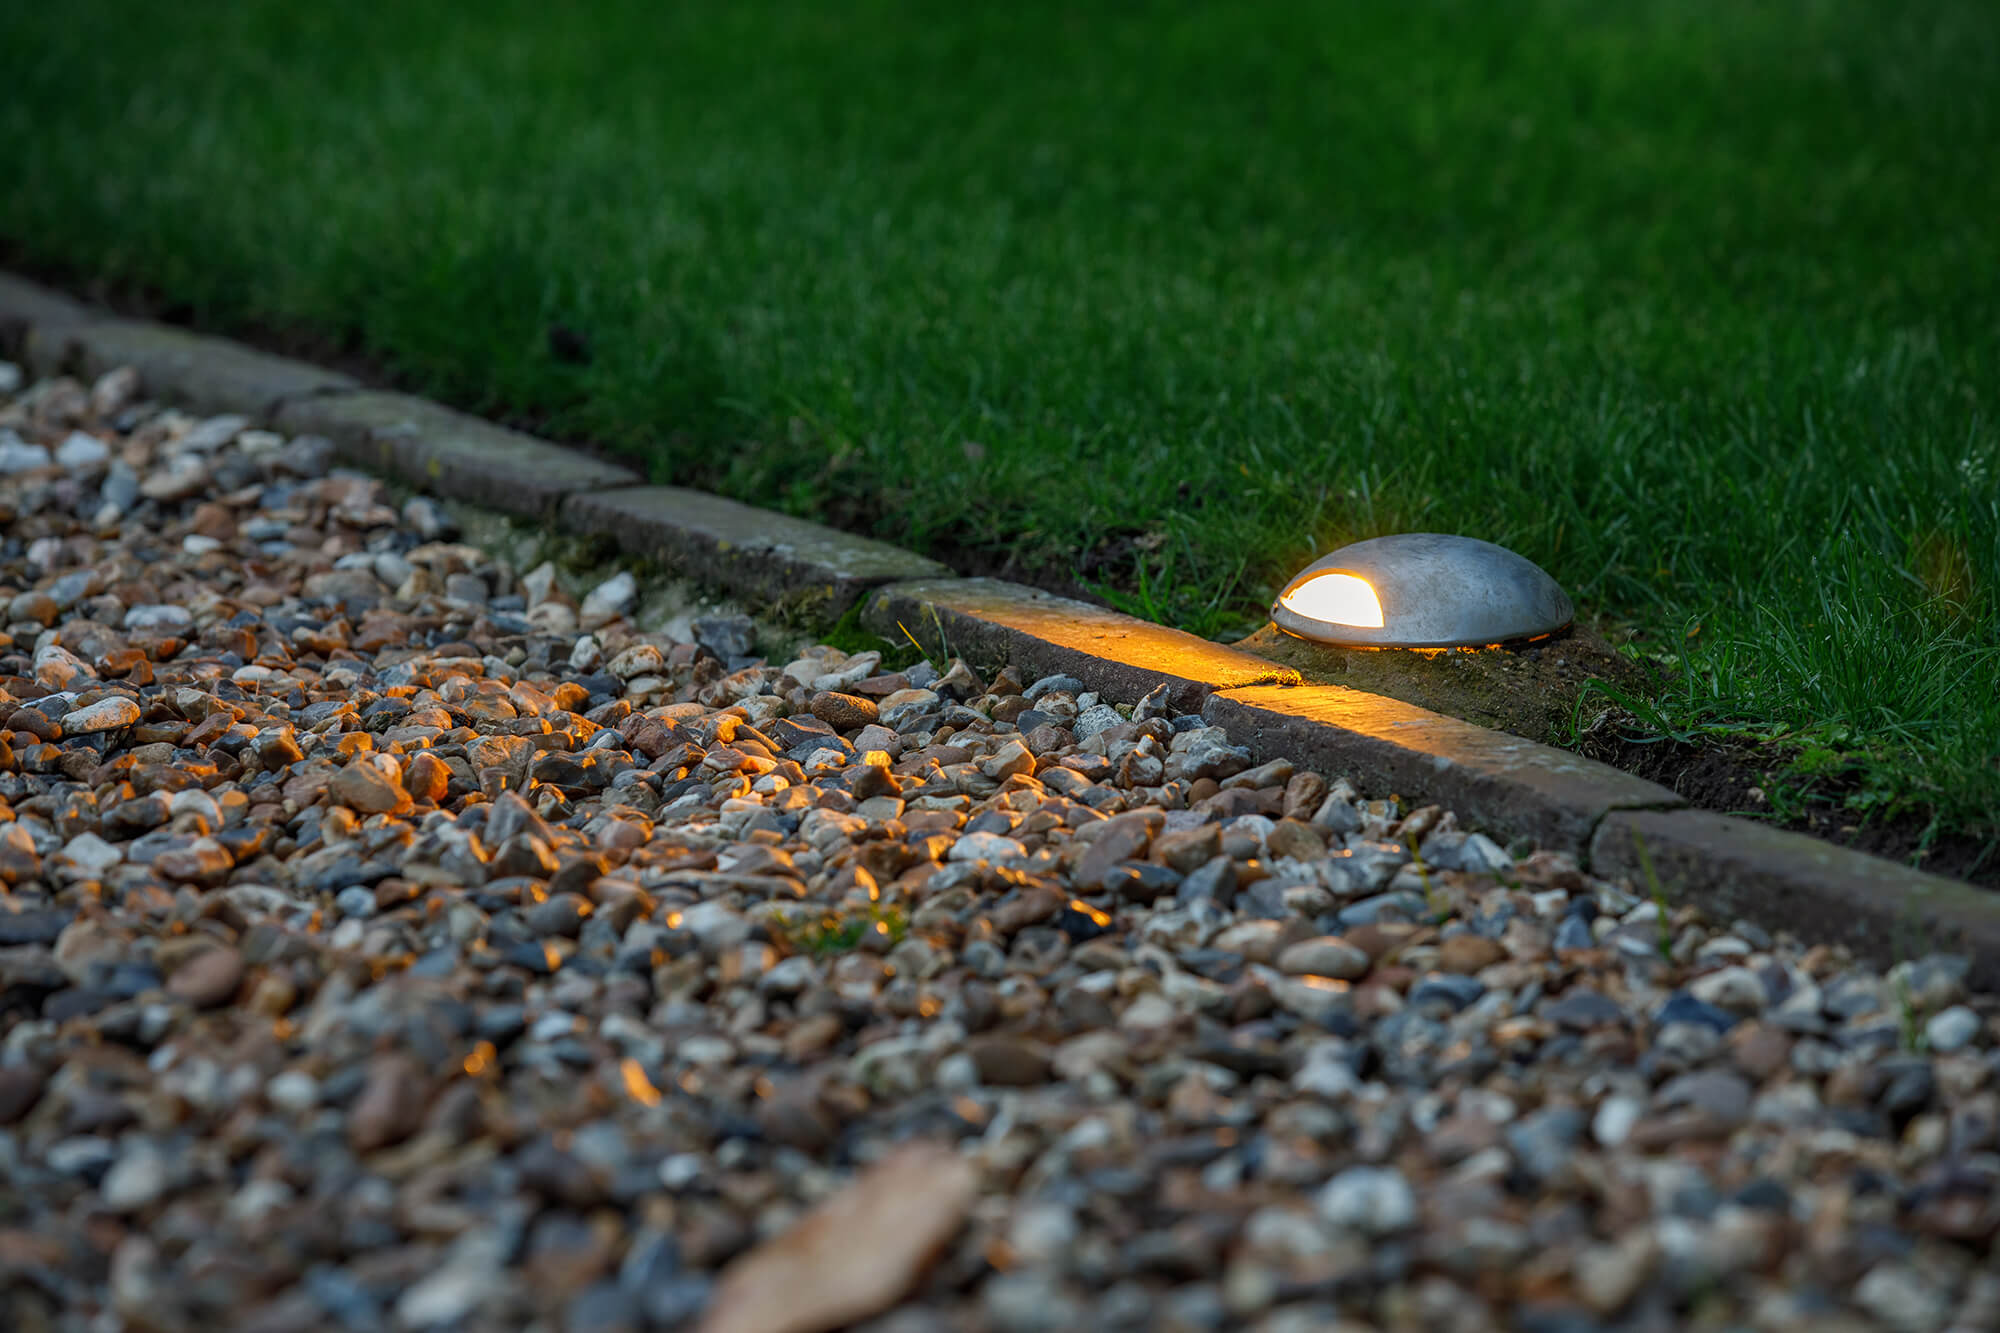 Garden lighting - path lights